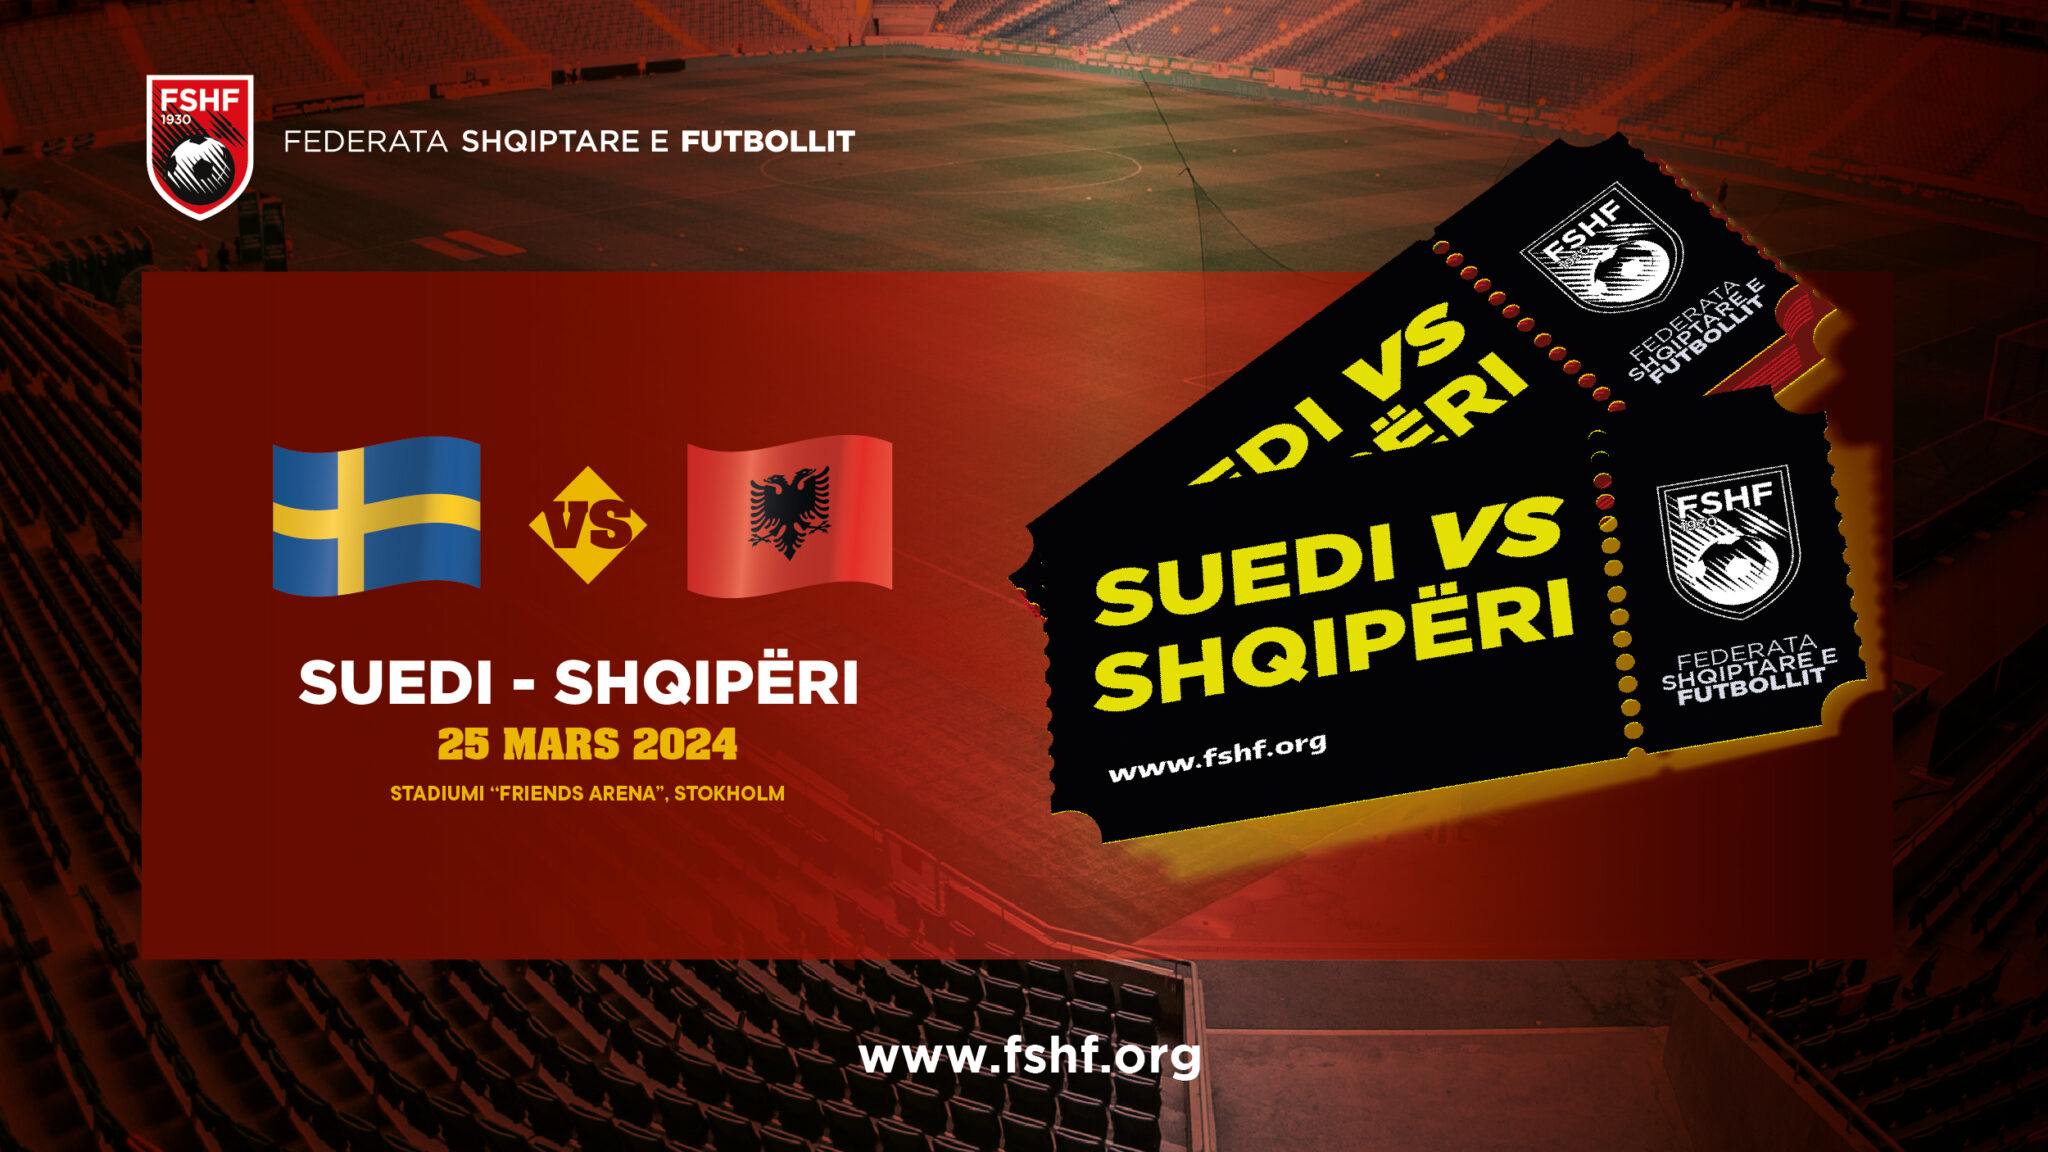 biletat e miqesores suedi shqiperi ja data kur biletat do te dalin ne shitje